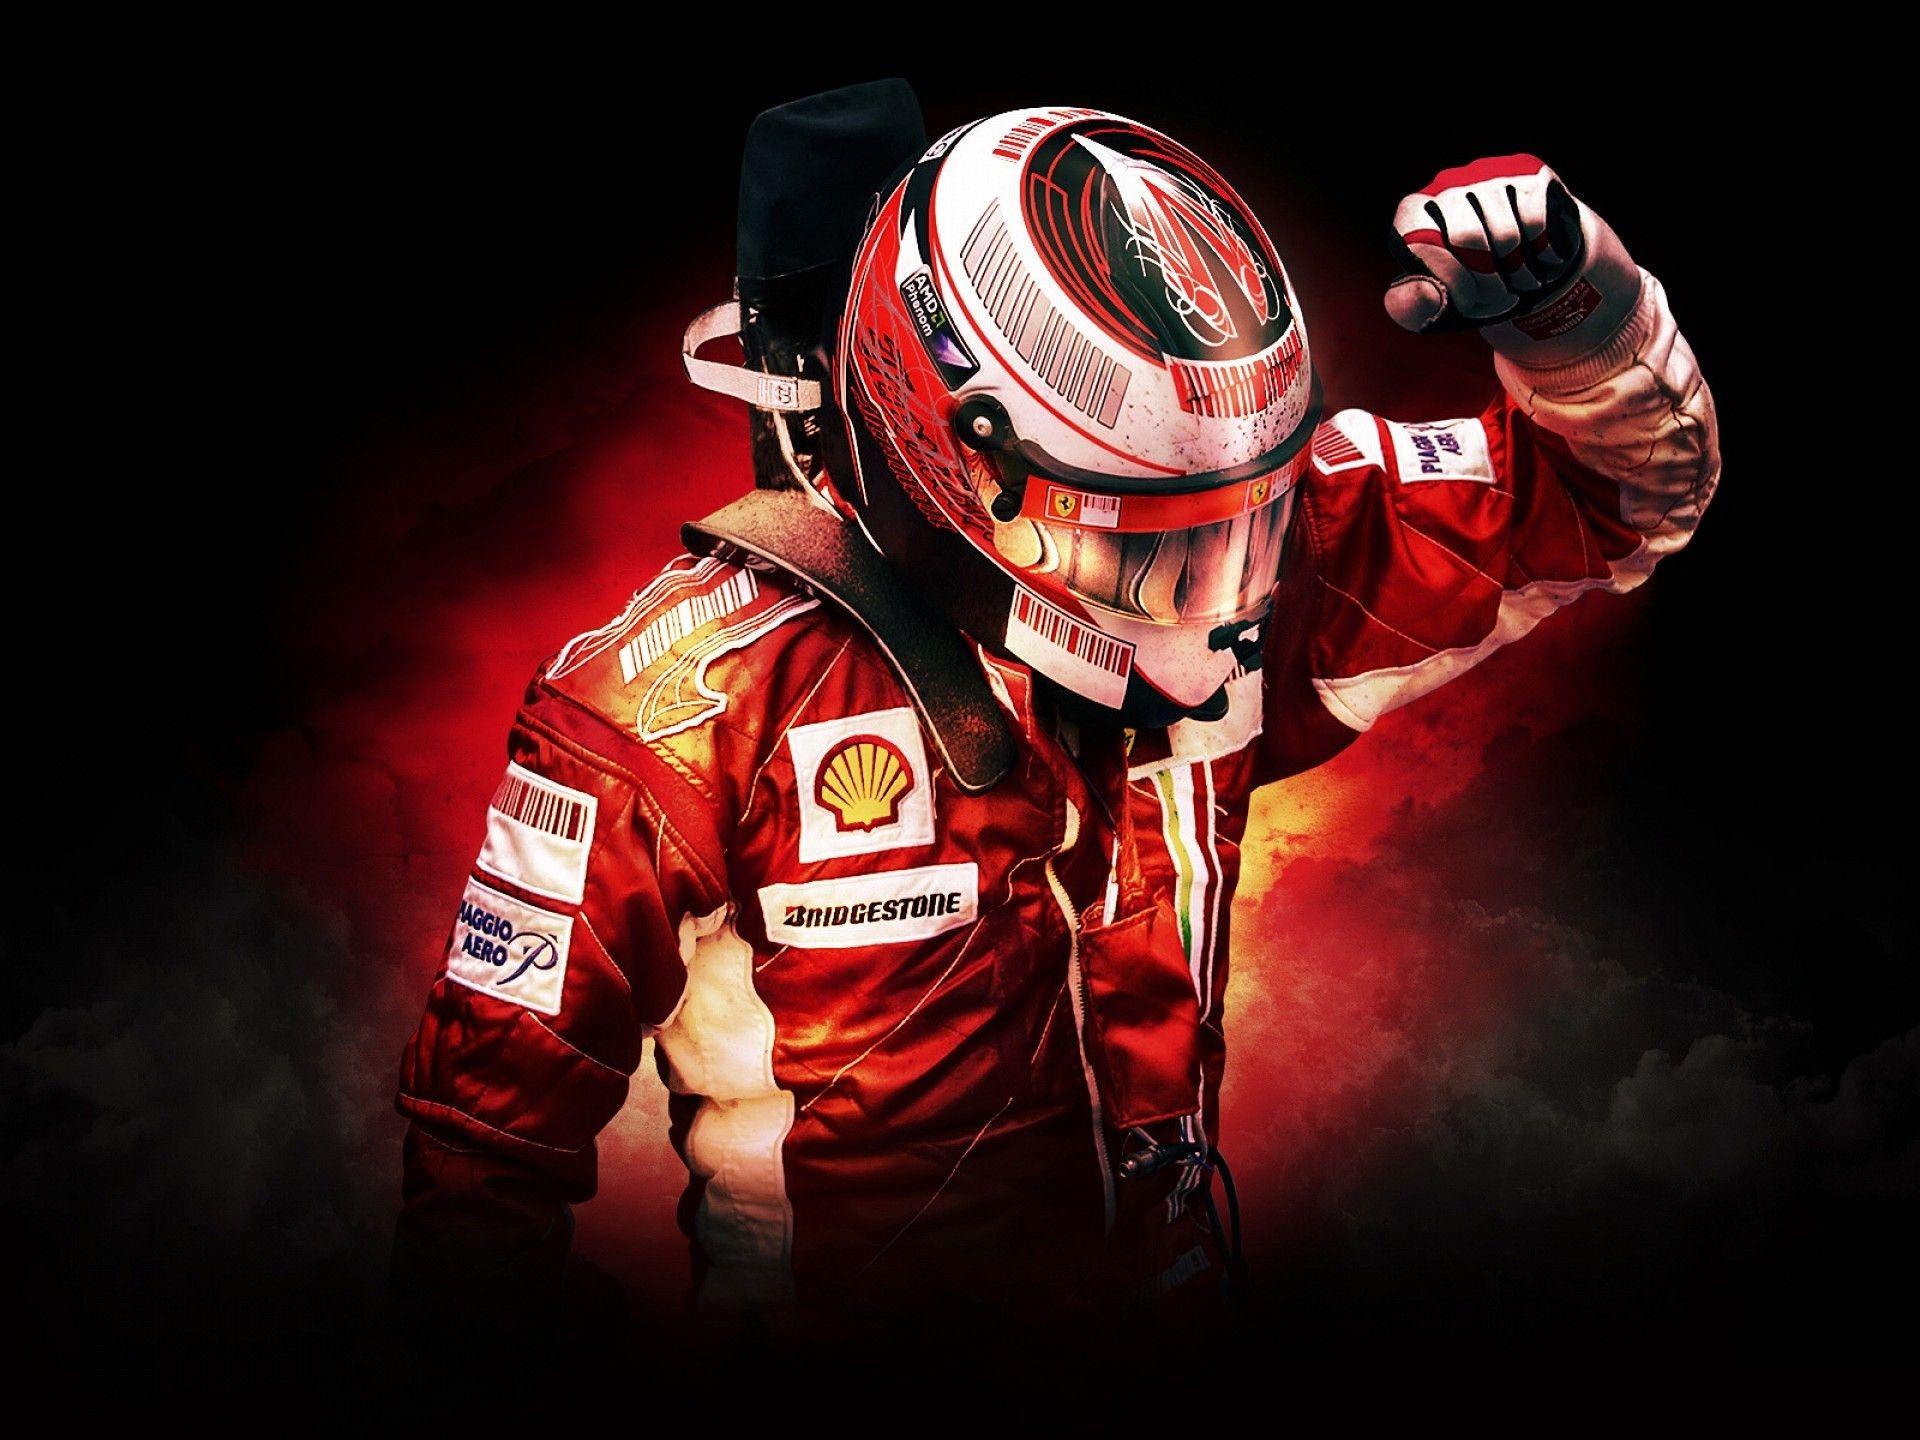 F1 Ferrari Formula One driver picture for desktop and wallpaper